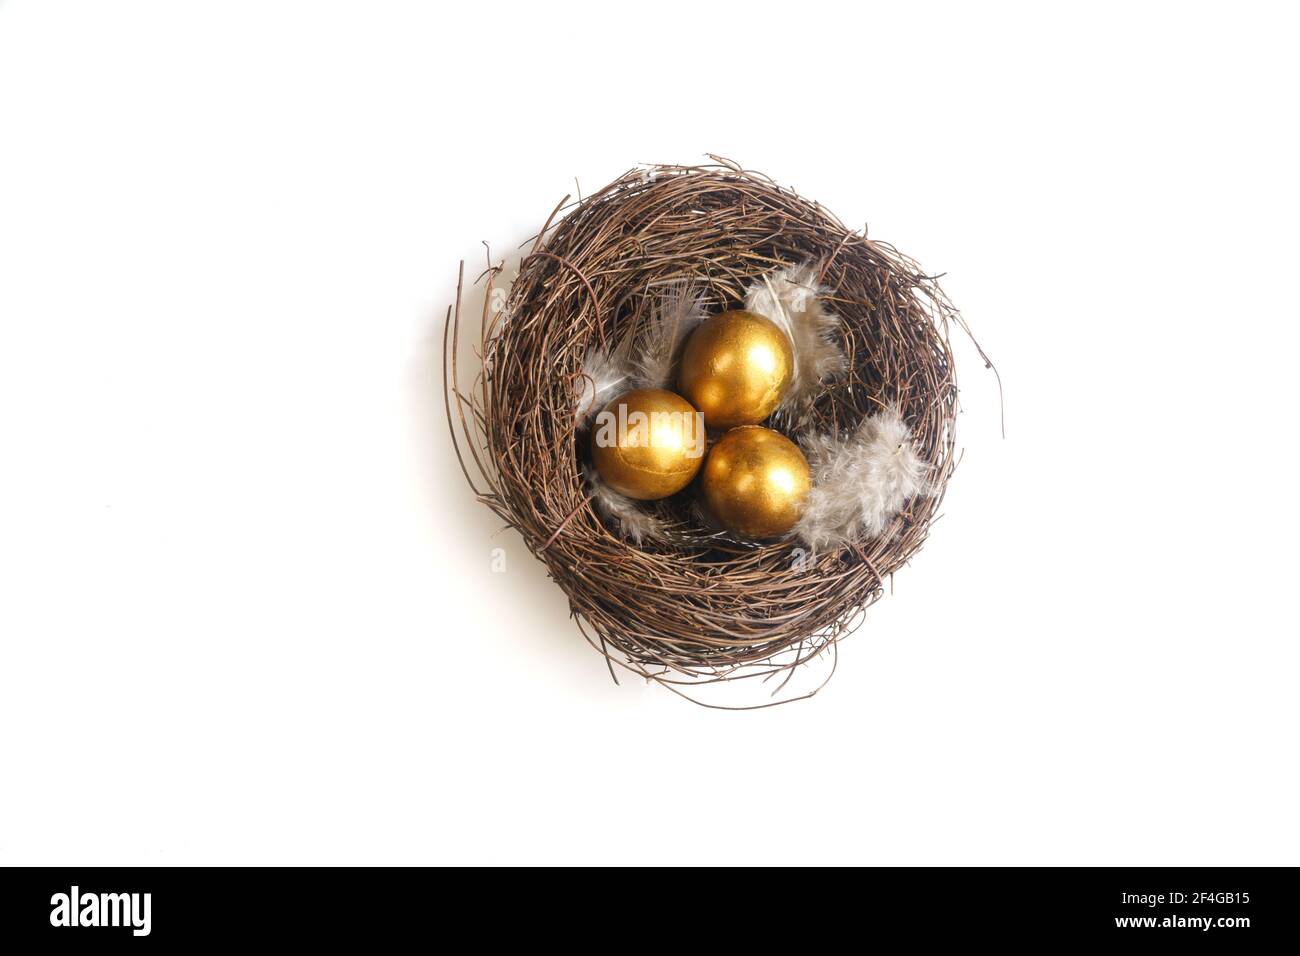 Golden eggs in a birds nest omn a white background Stock Photo